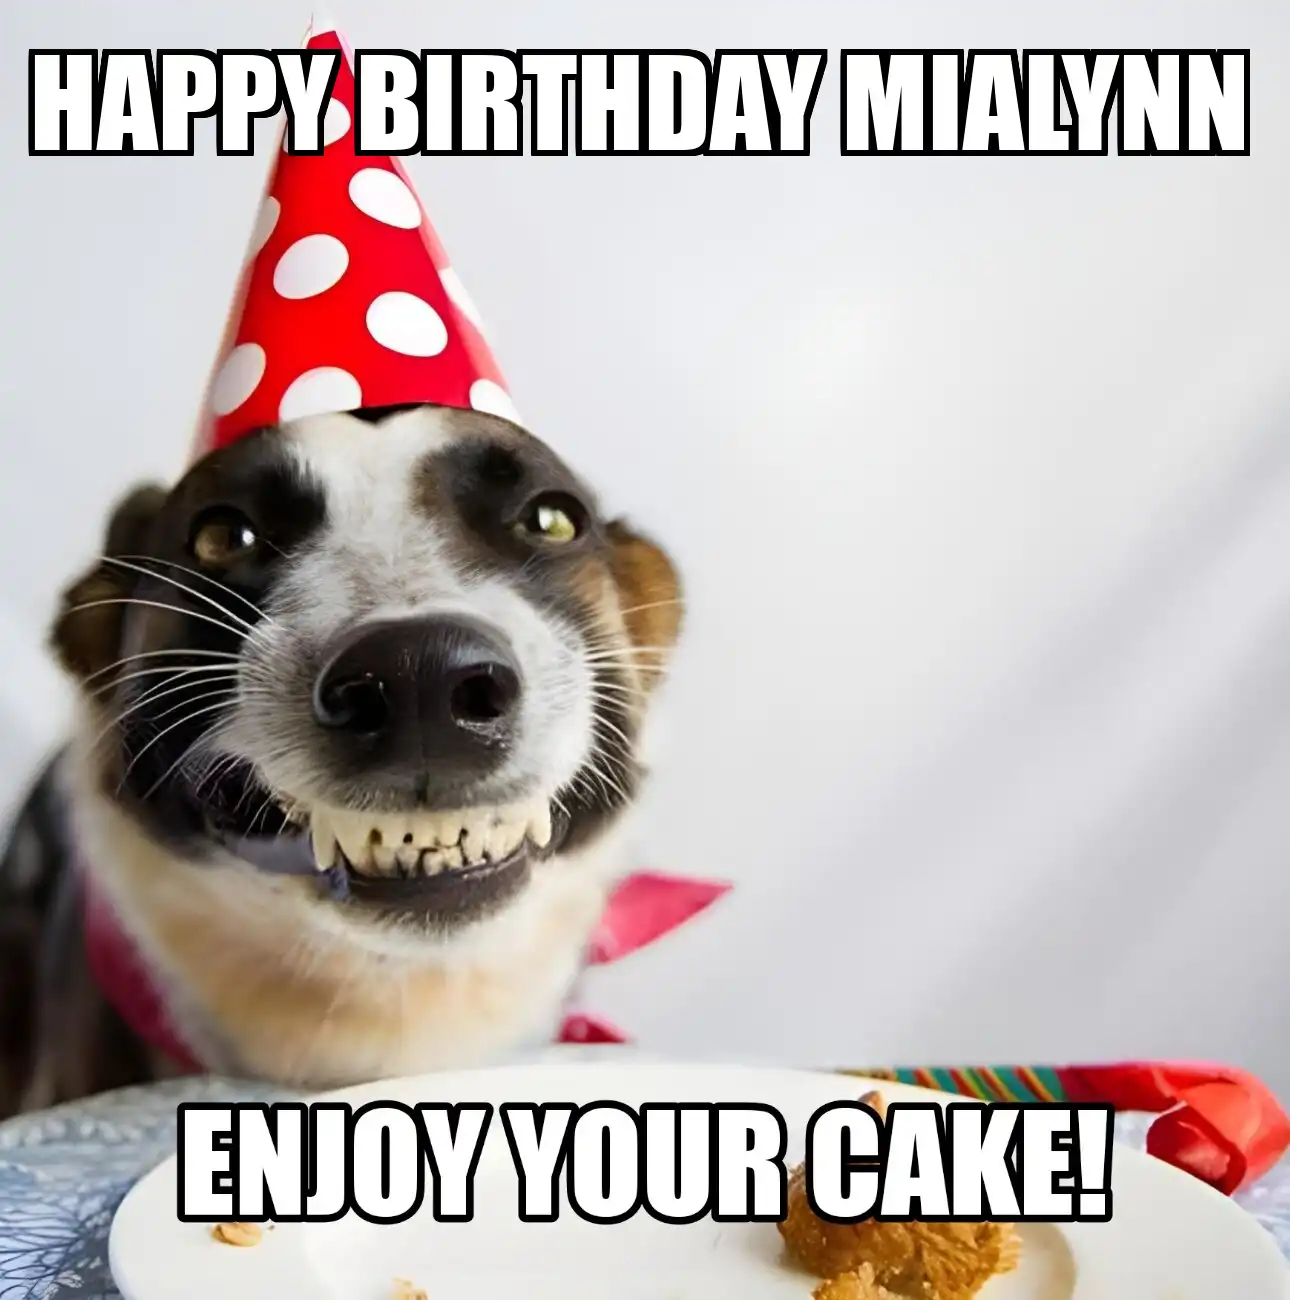 Happy Birthday Mialynn Enjoy Your Cake Dog Meme